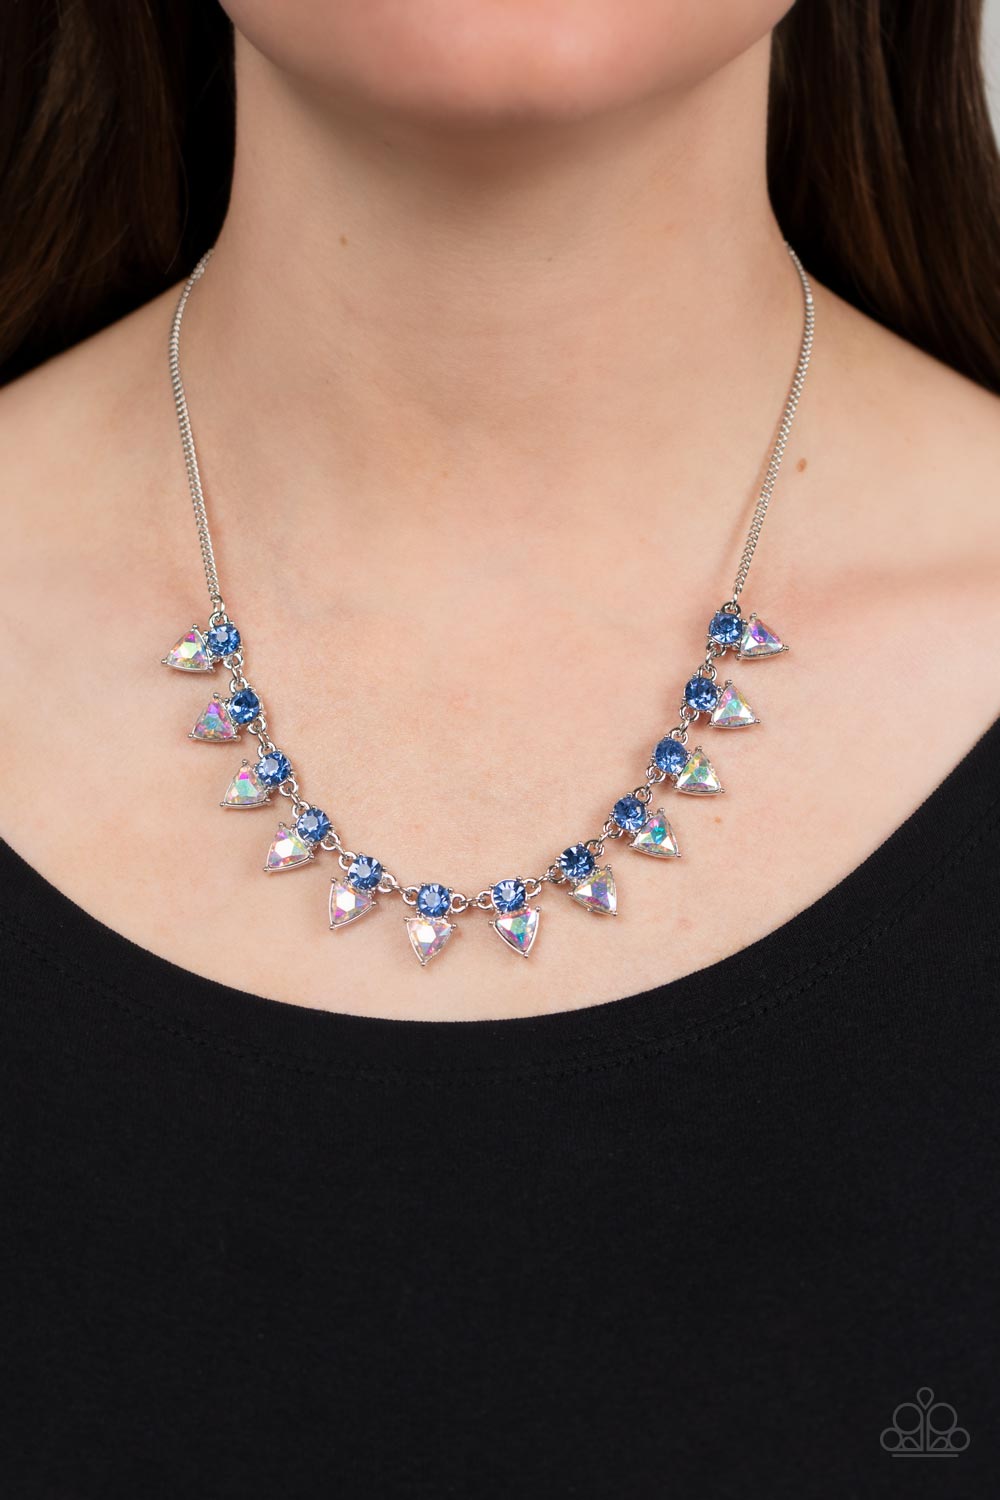 Razor-Sharp Refinement Blue &amp; Iridescent Rhinestone Necklace - Paparazzi Accessories-on model - CarasShop.com - $5 Jewelry by Cara Jewels